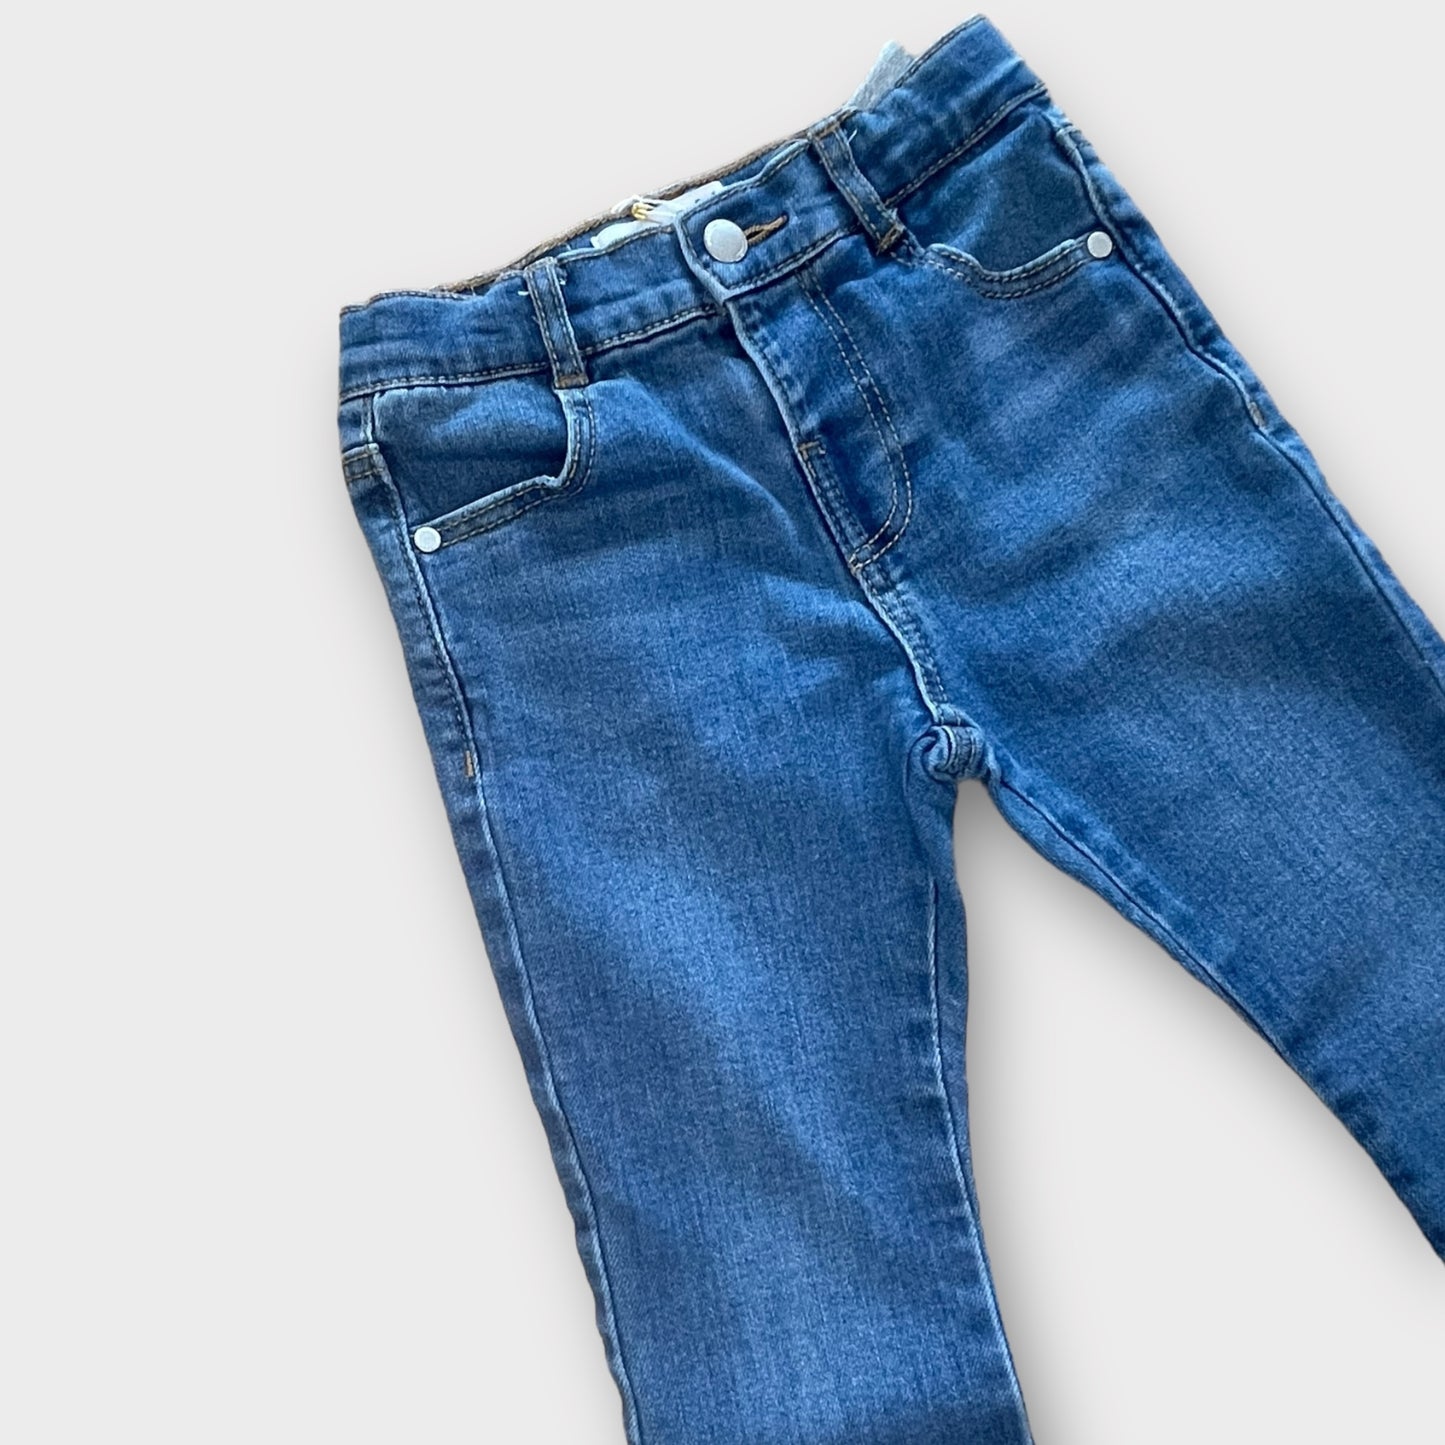 Zara - Jeans - 3 - 4 ans (104cm)